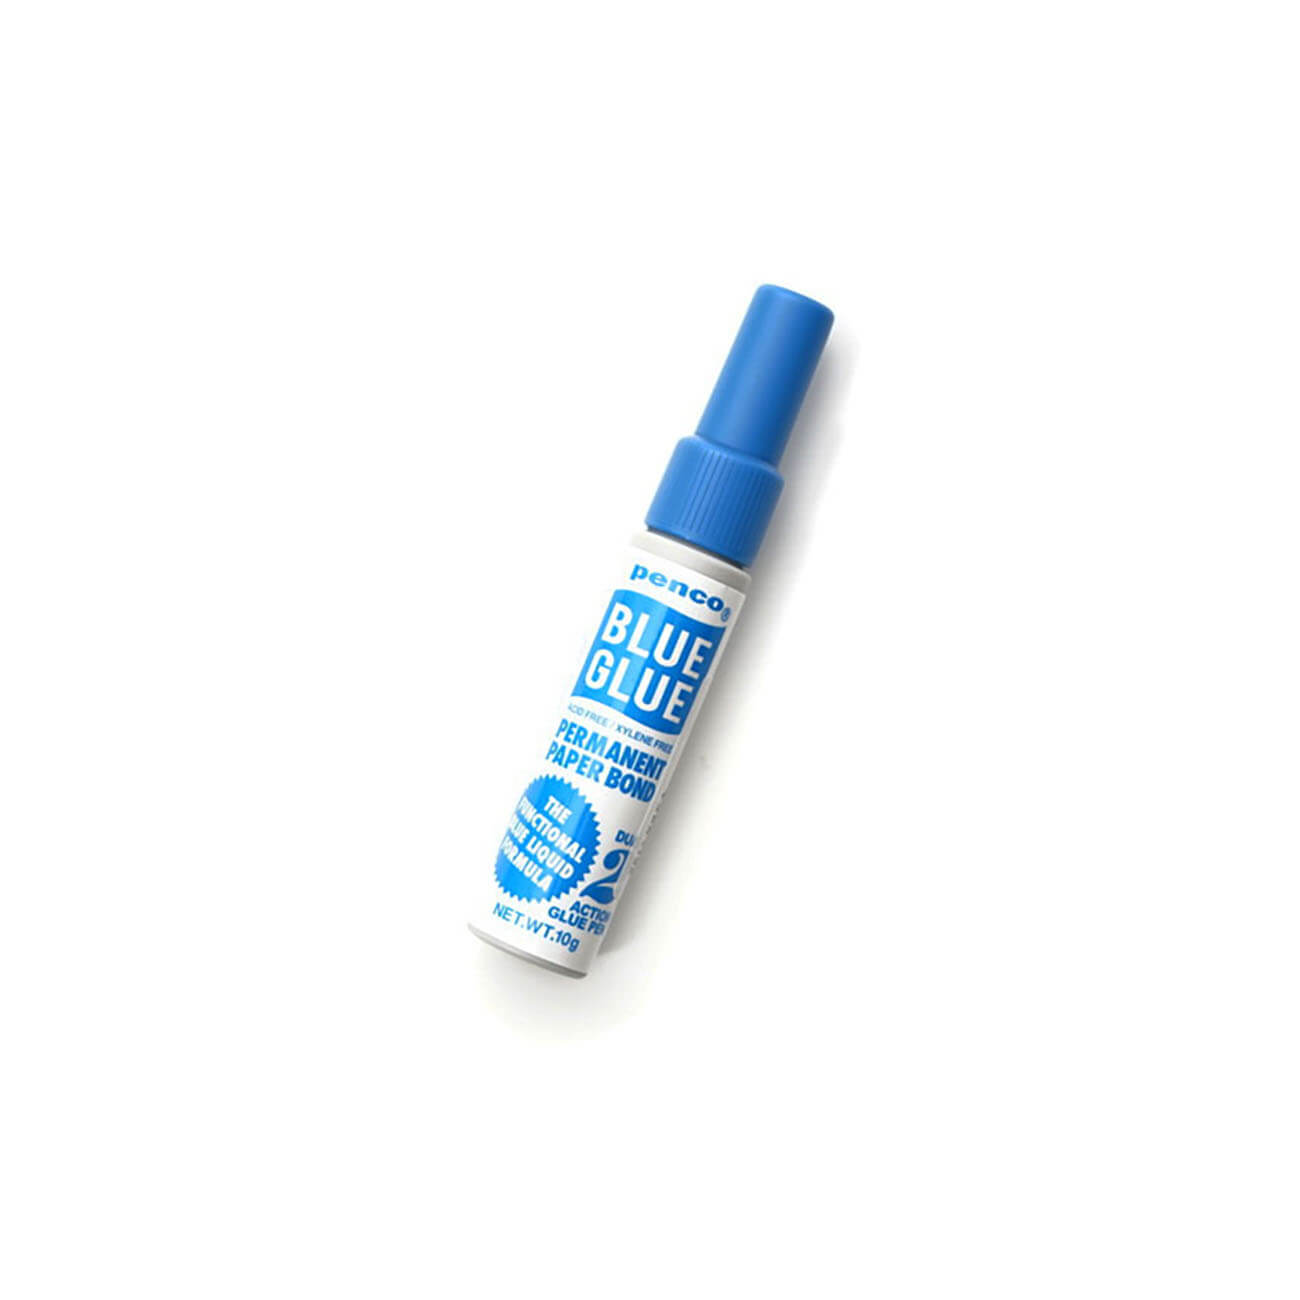 Blue Glue Pen